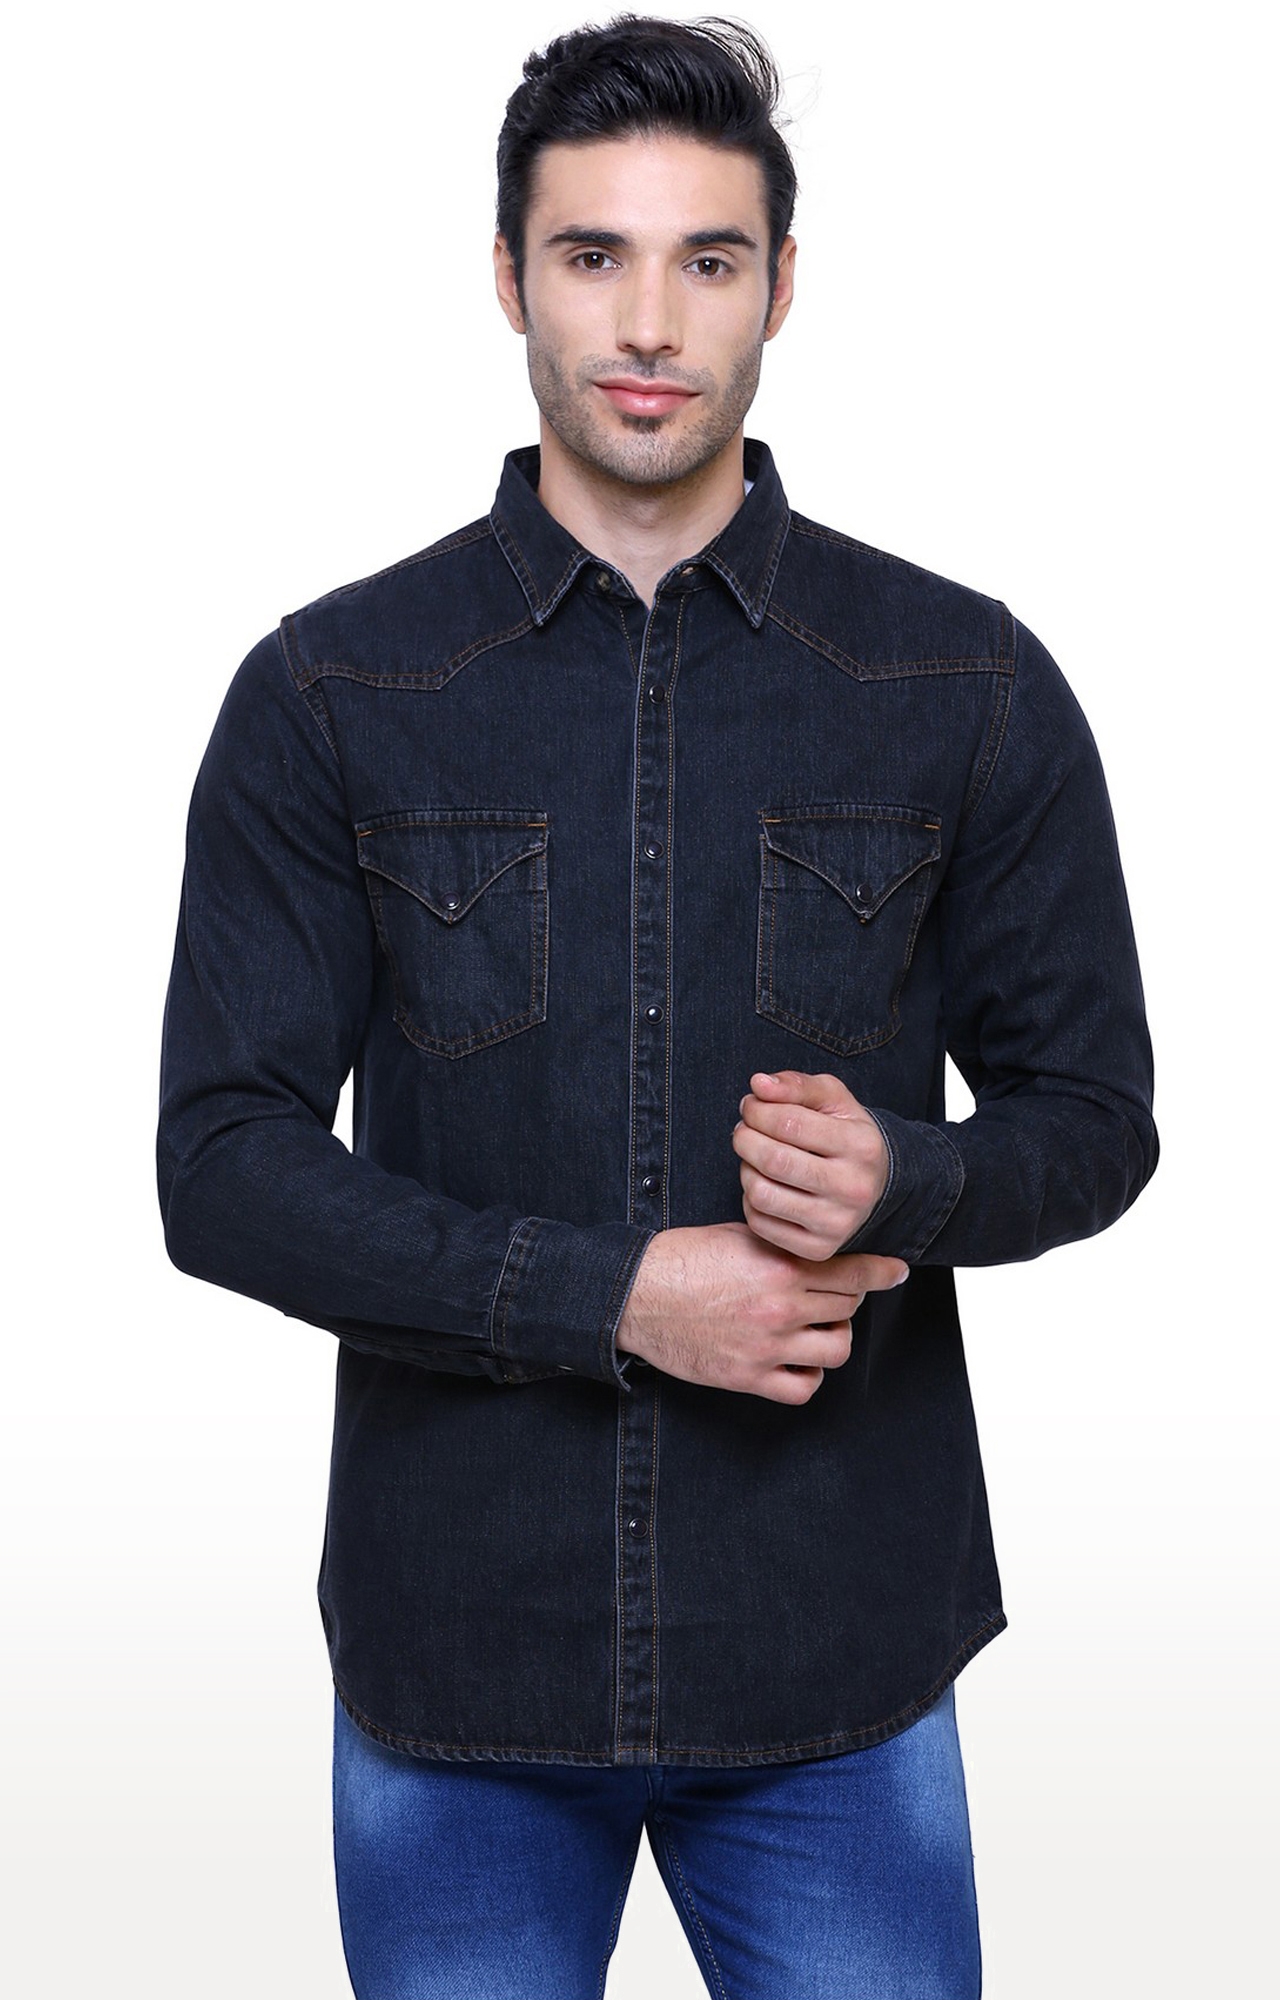 Southbay Men's Carbon Black Casual Denim Shirt